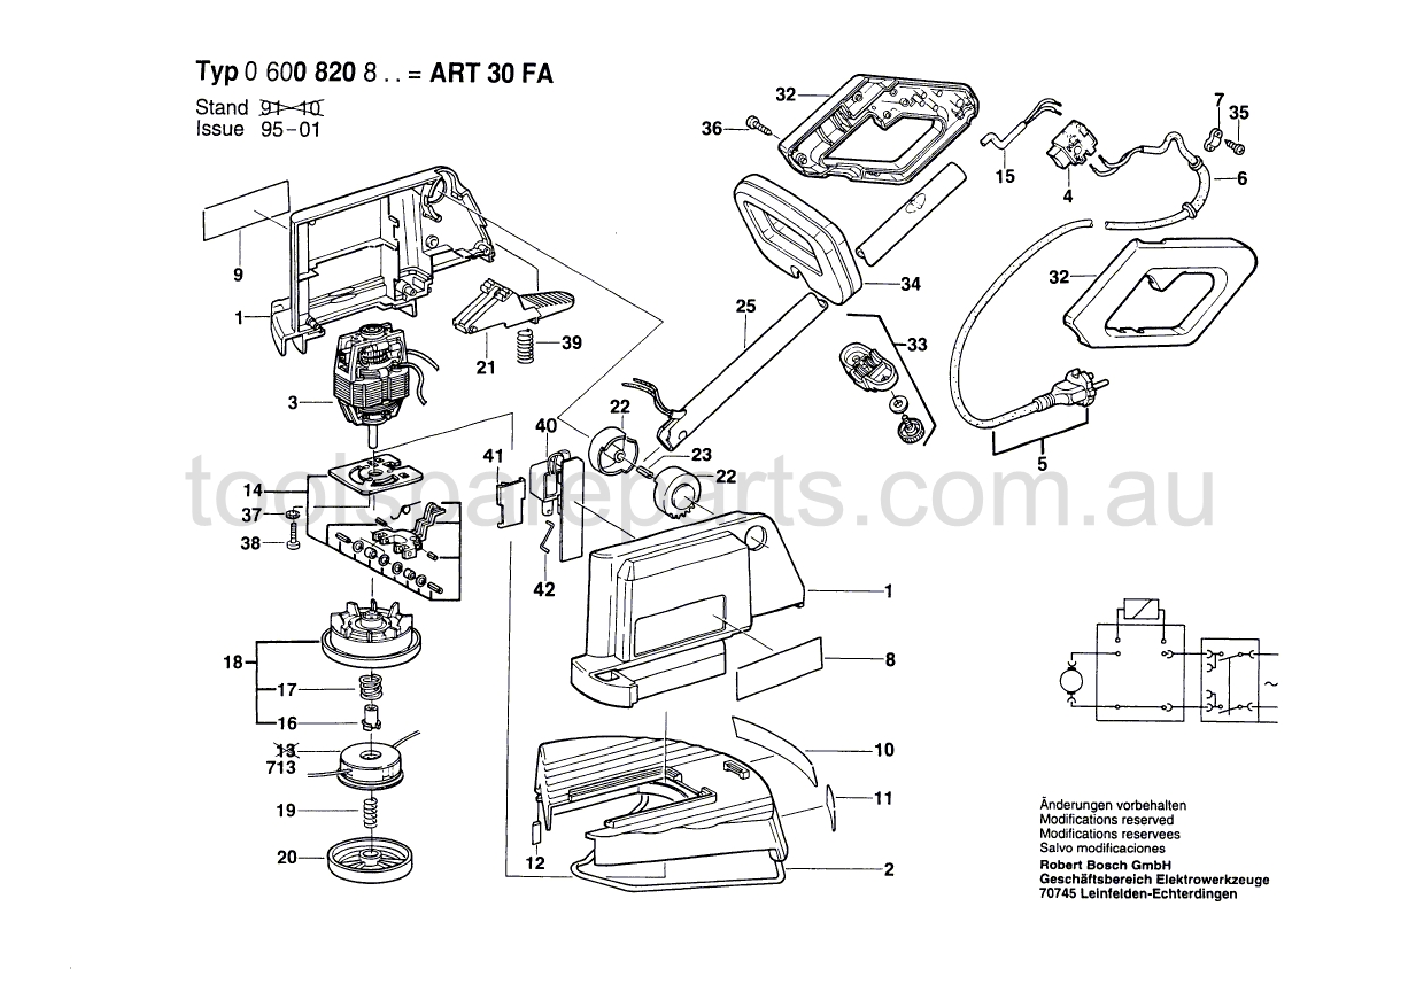 Bosch ART 30 FA 0600820837  Diagram 1